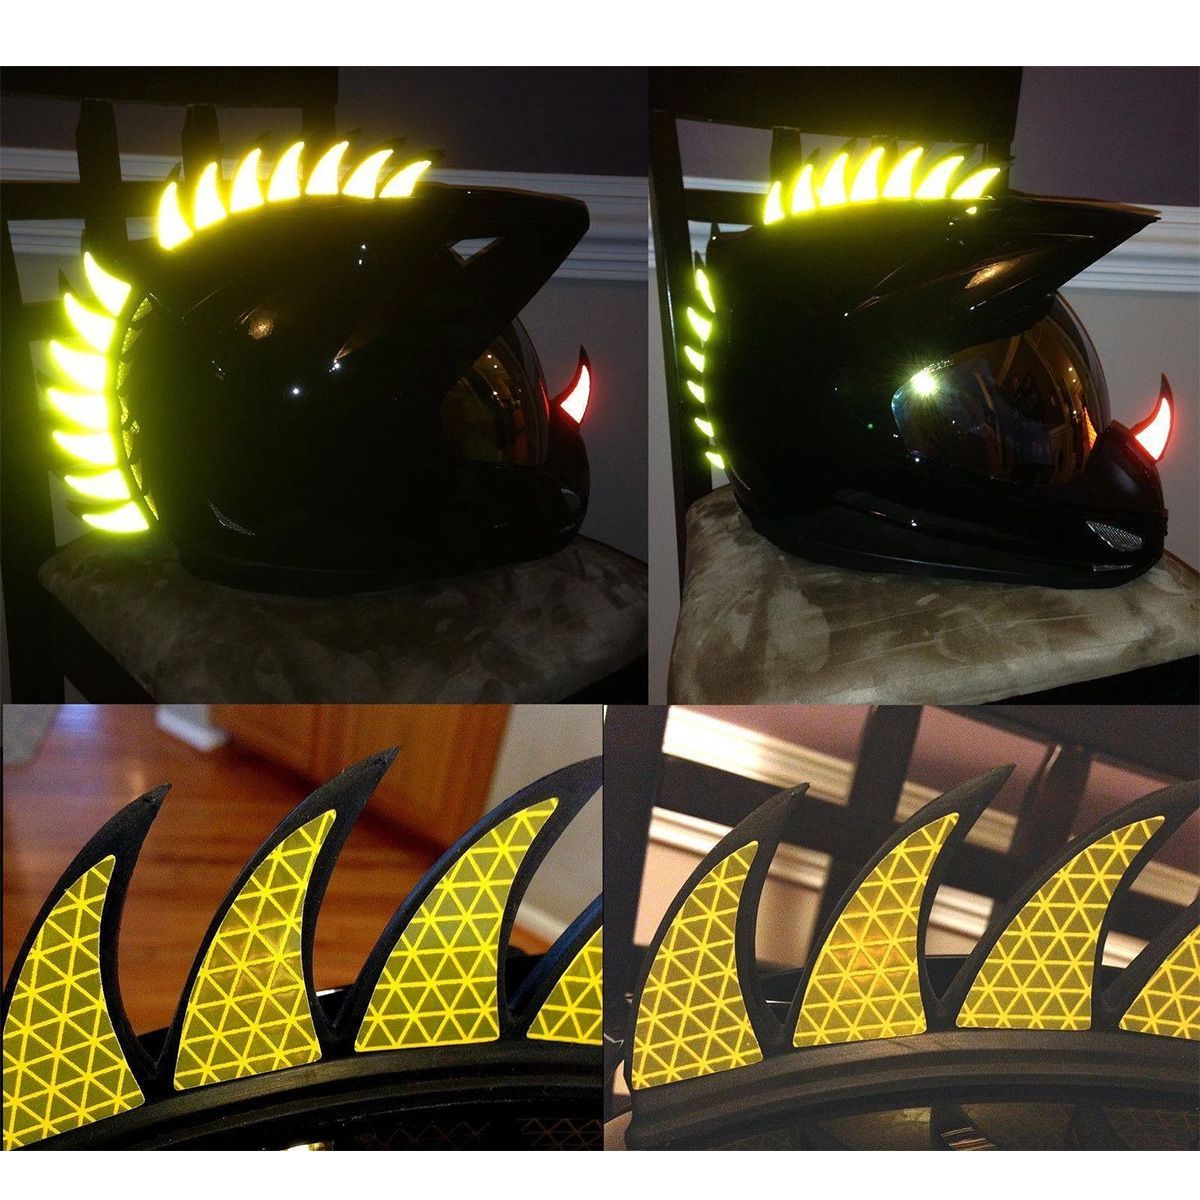 New-Reflective-Decals-Sticker-for-Rubber-Helmet-Mohawk-Warhawk-Spikes-Dirtbike-Motorcycle-1574781